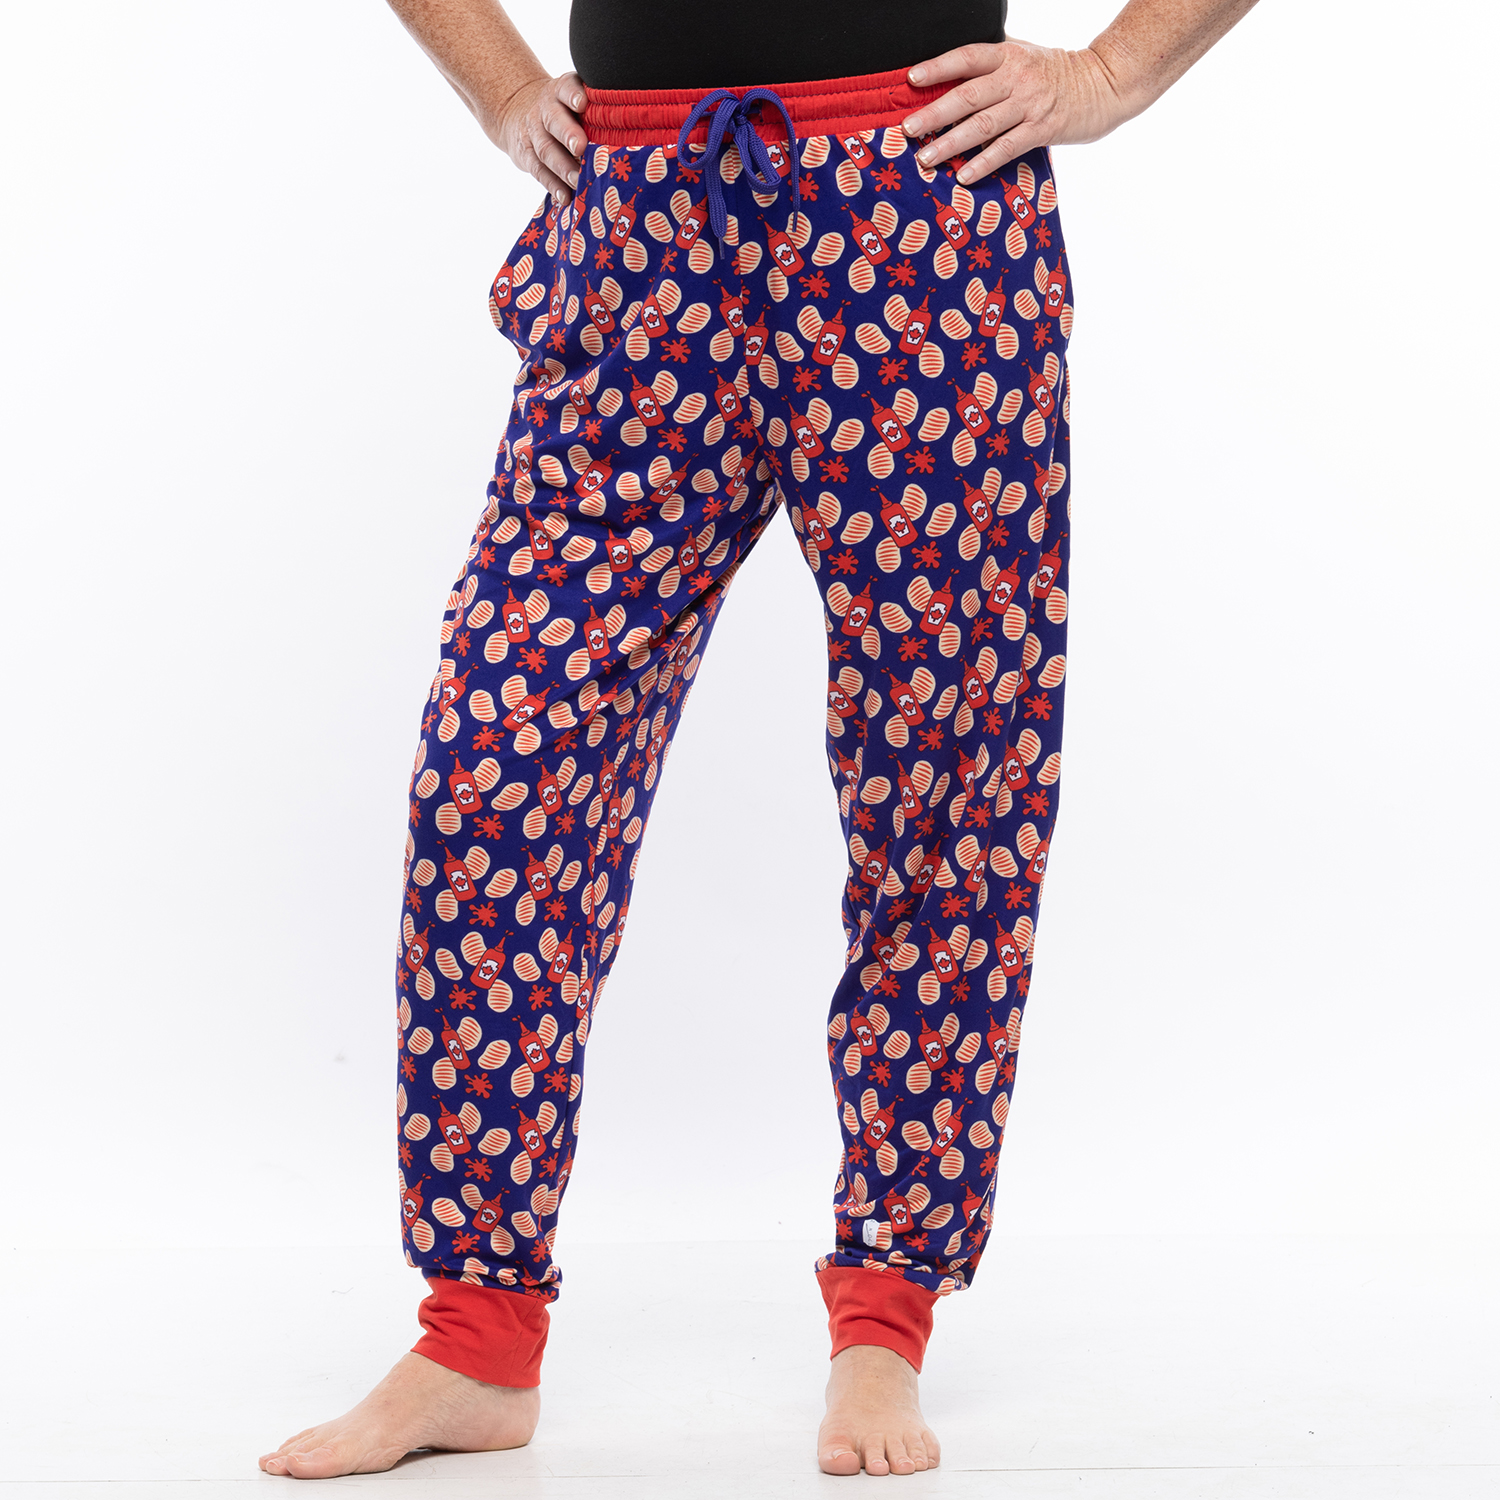 Canadian Curling Pajama Pants